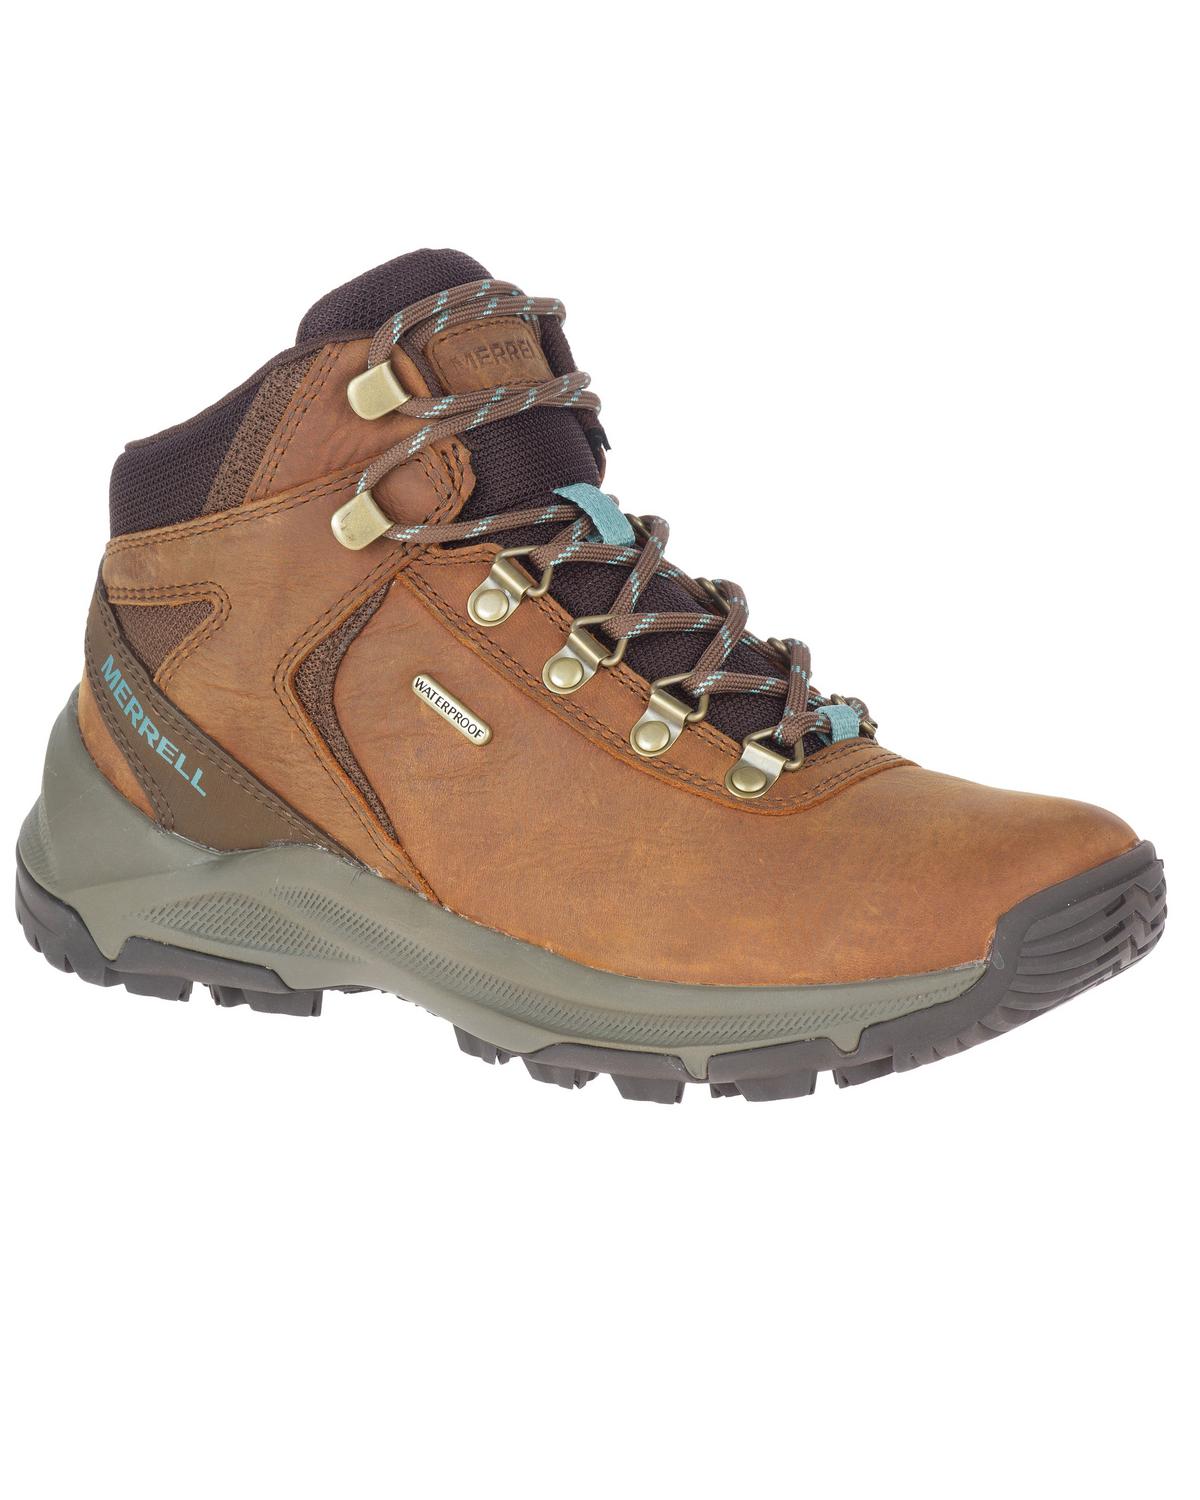 Merrell Women’s Erie Mid LTR Waterproof Hiking Boots -  Brown